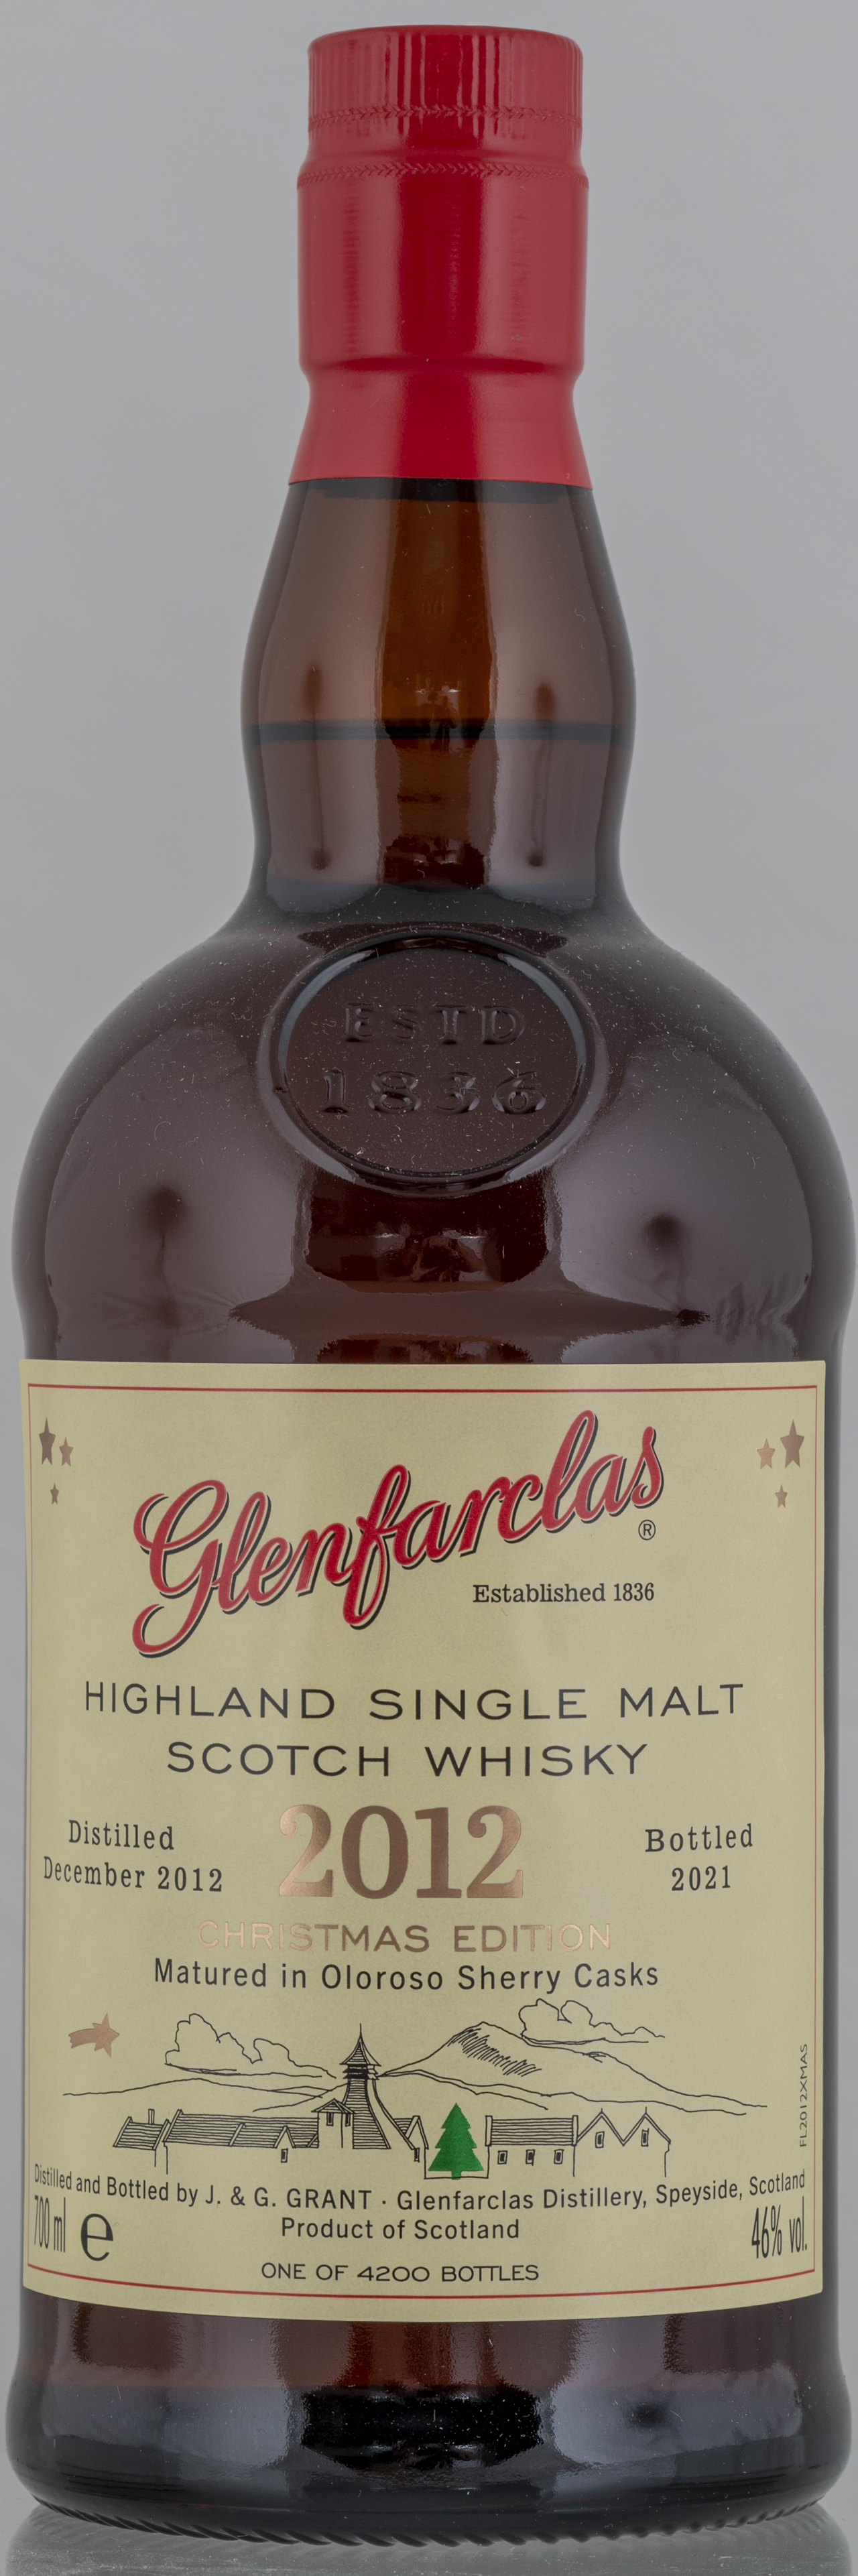 Billede: PHC_7291 - Glenfarclas 2012-2021 Christmas Edition - bottle.jpg